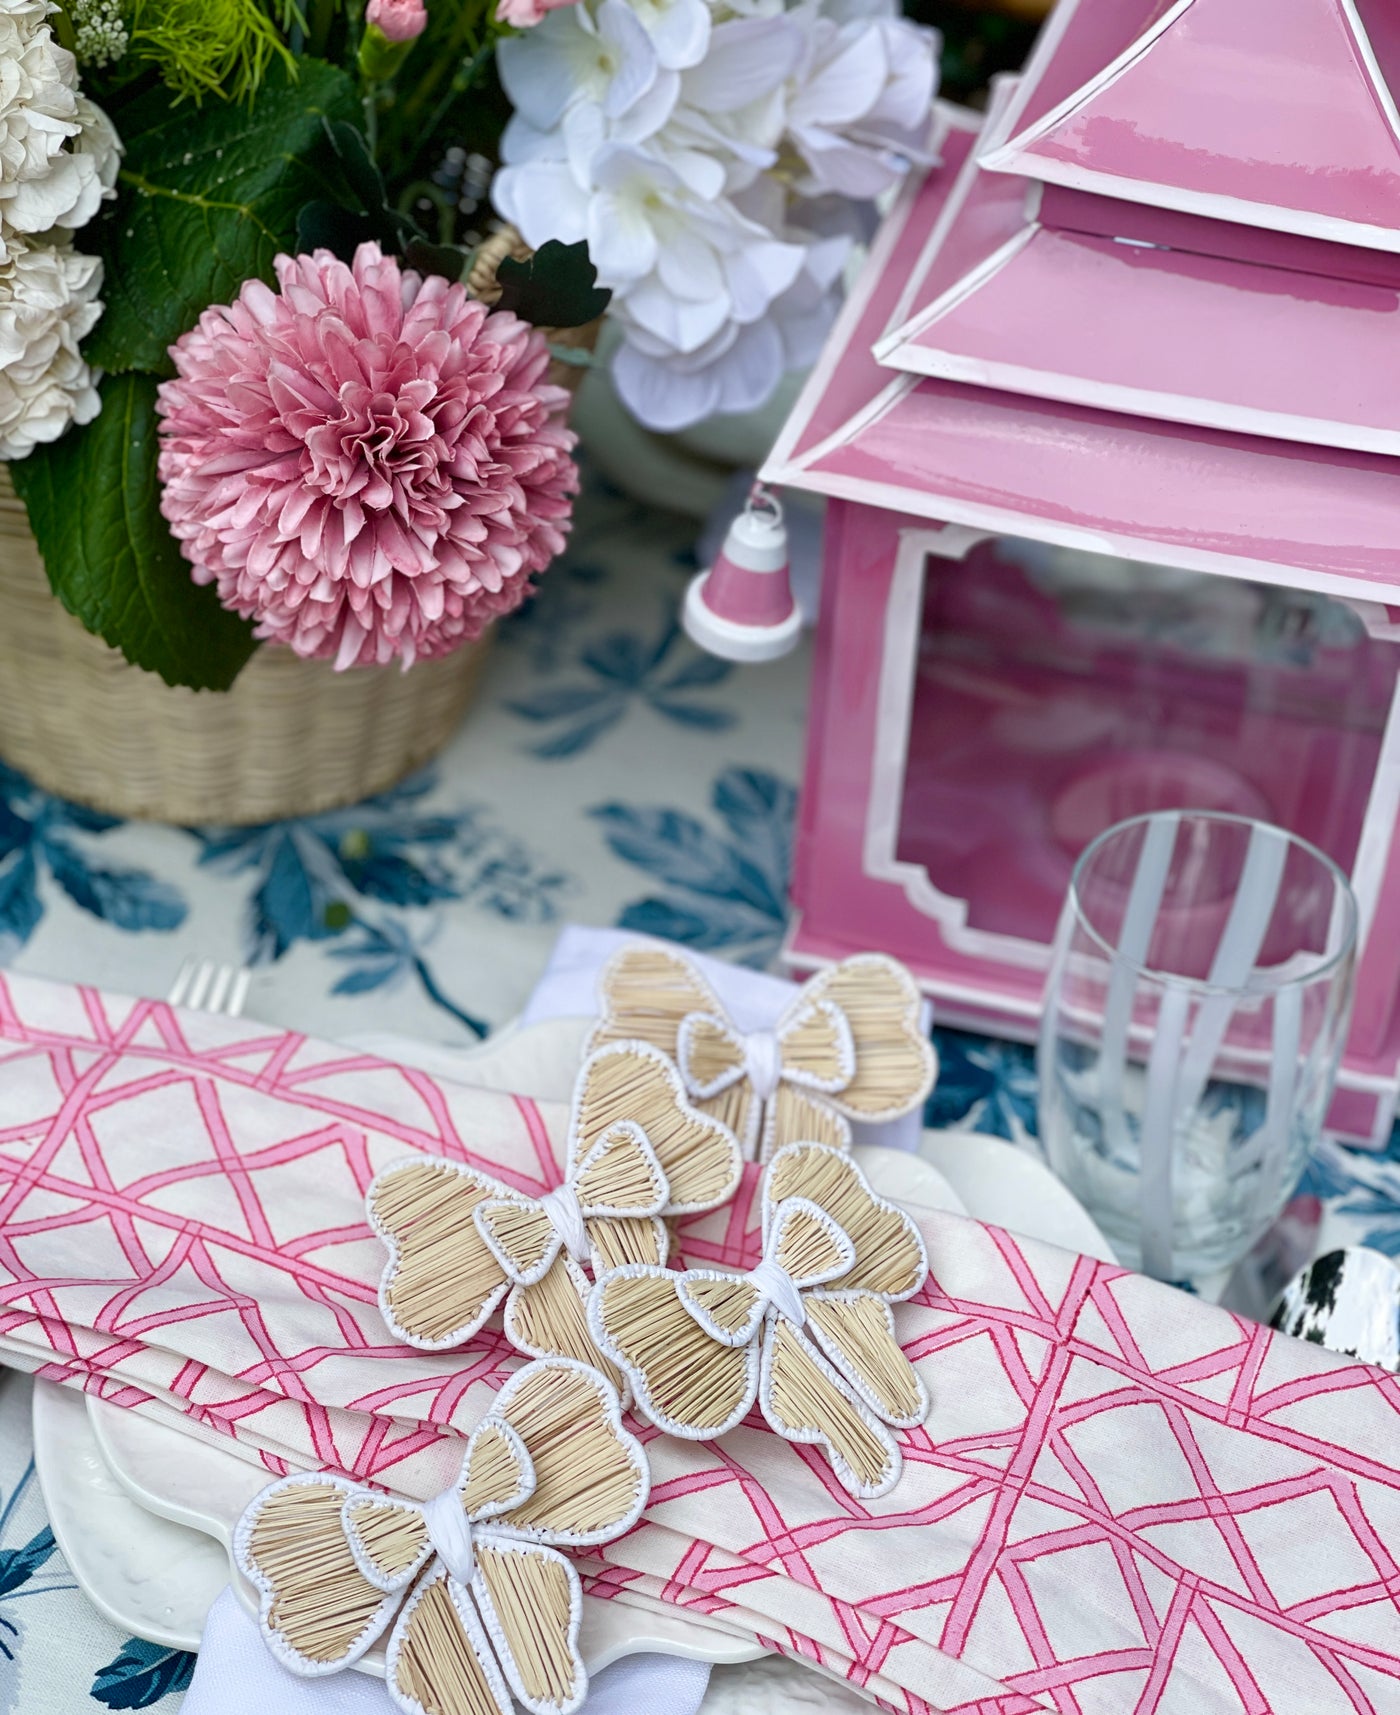 Set of 4 Hand Block Printed 'Lattice - Pink' Cloth Napkins